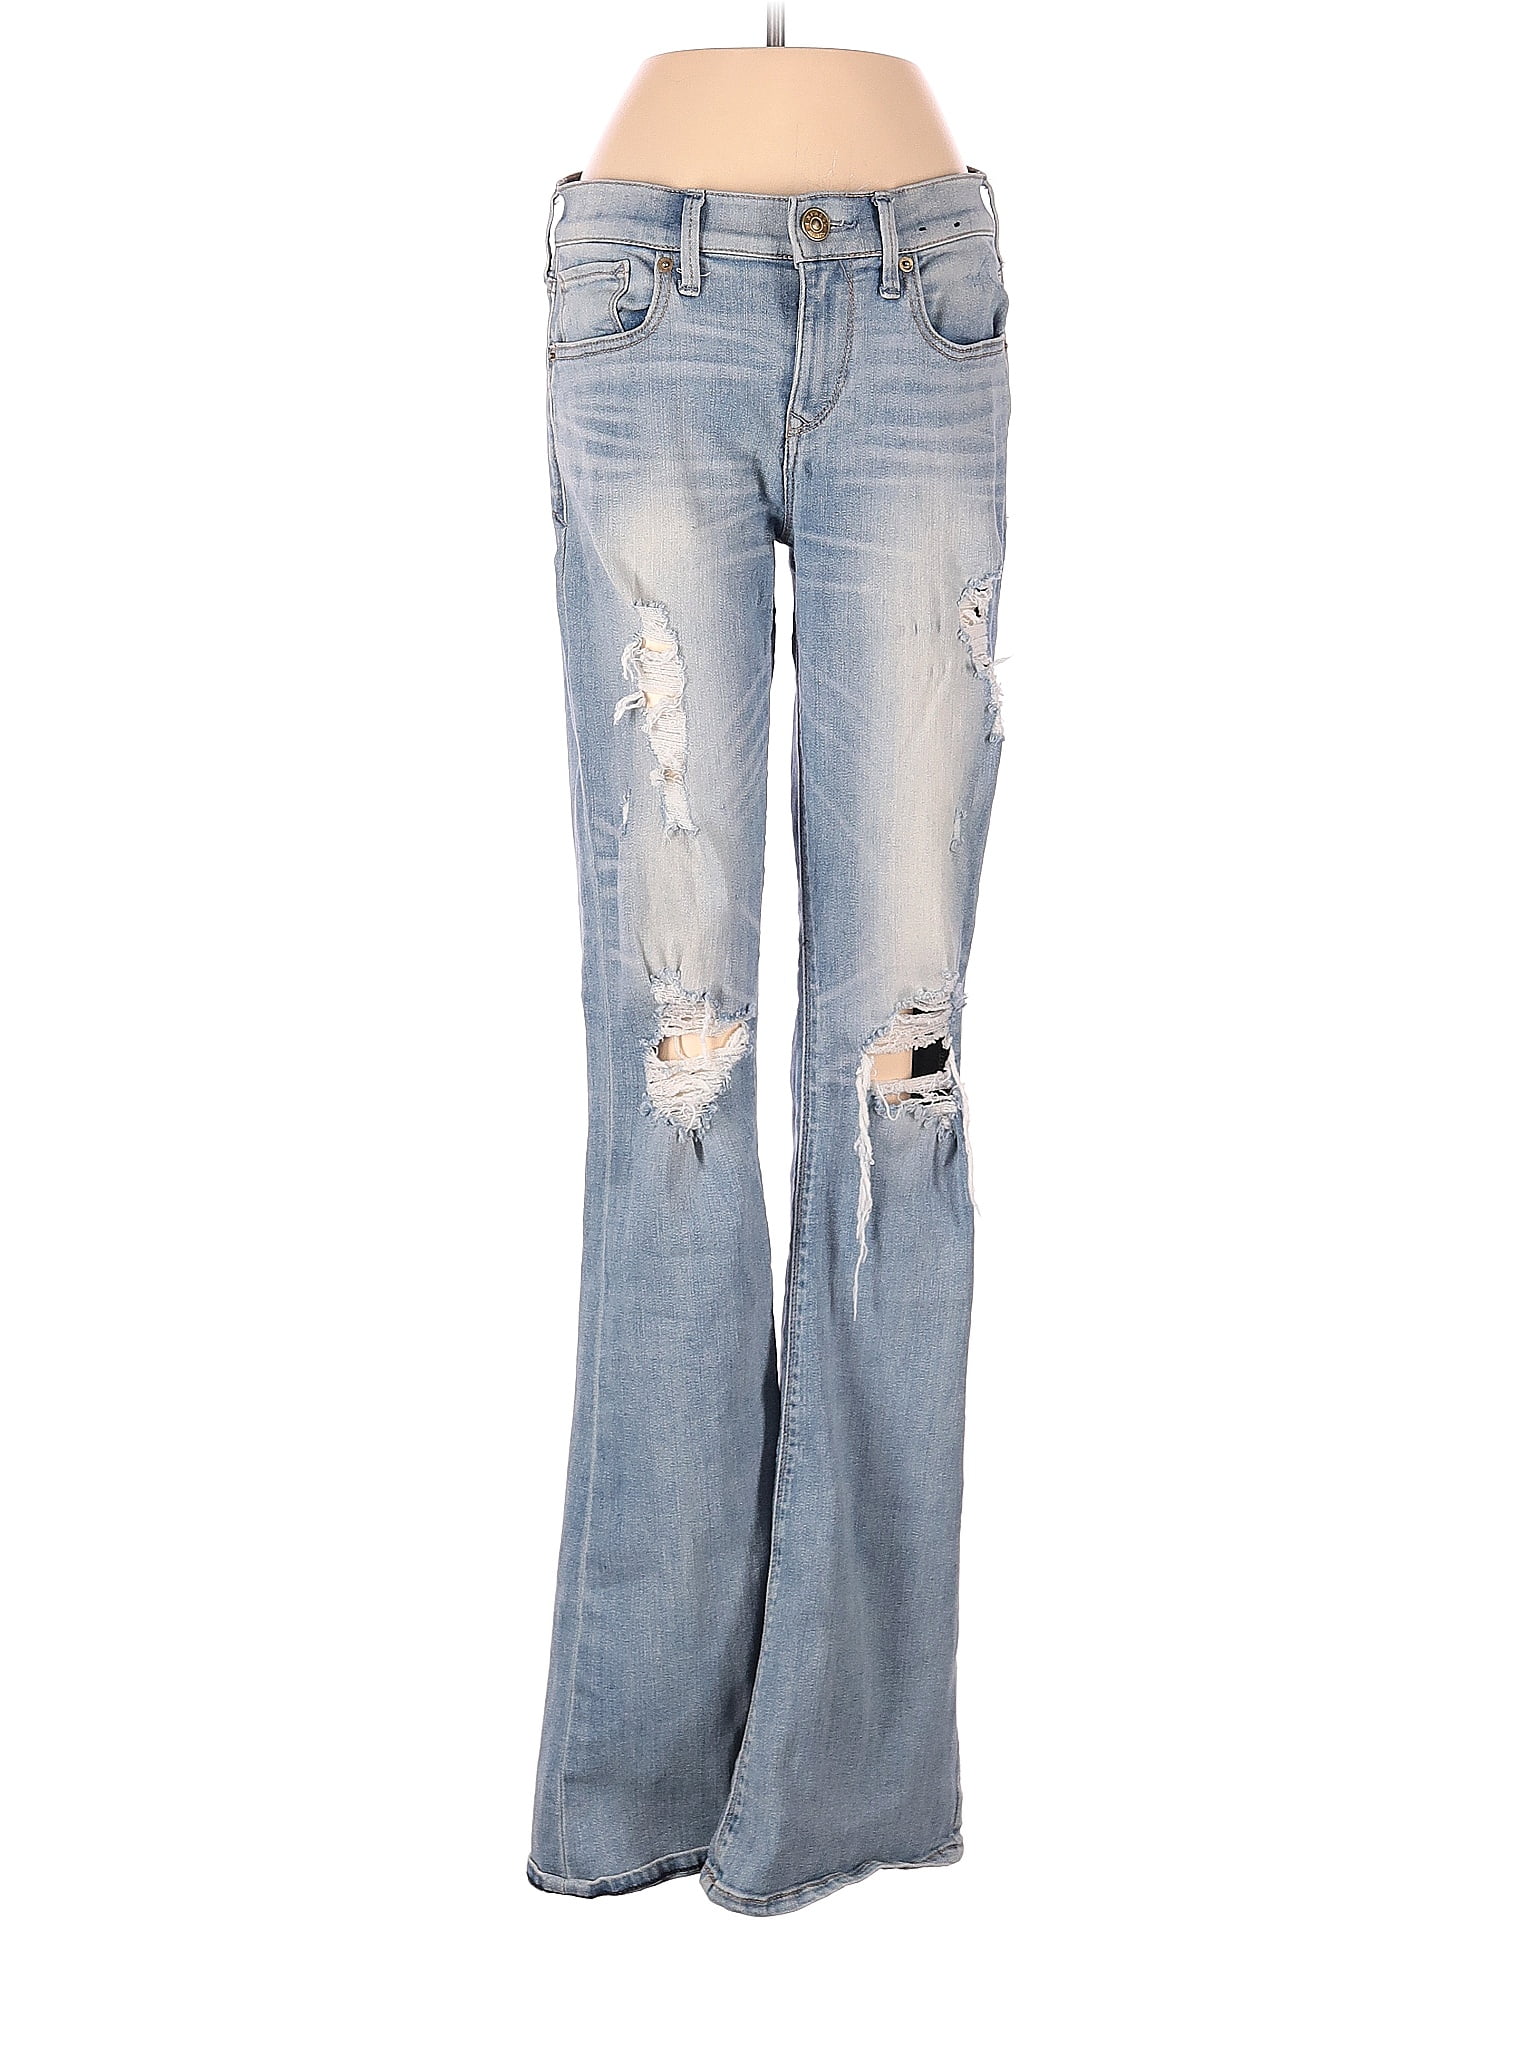 Express Jeans Blue Jeans Size 0 - 70% off | thredUP